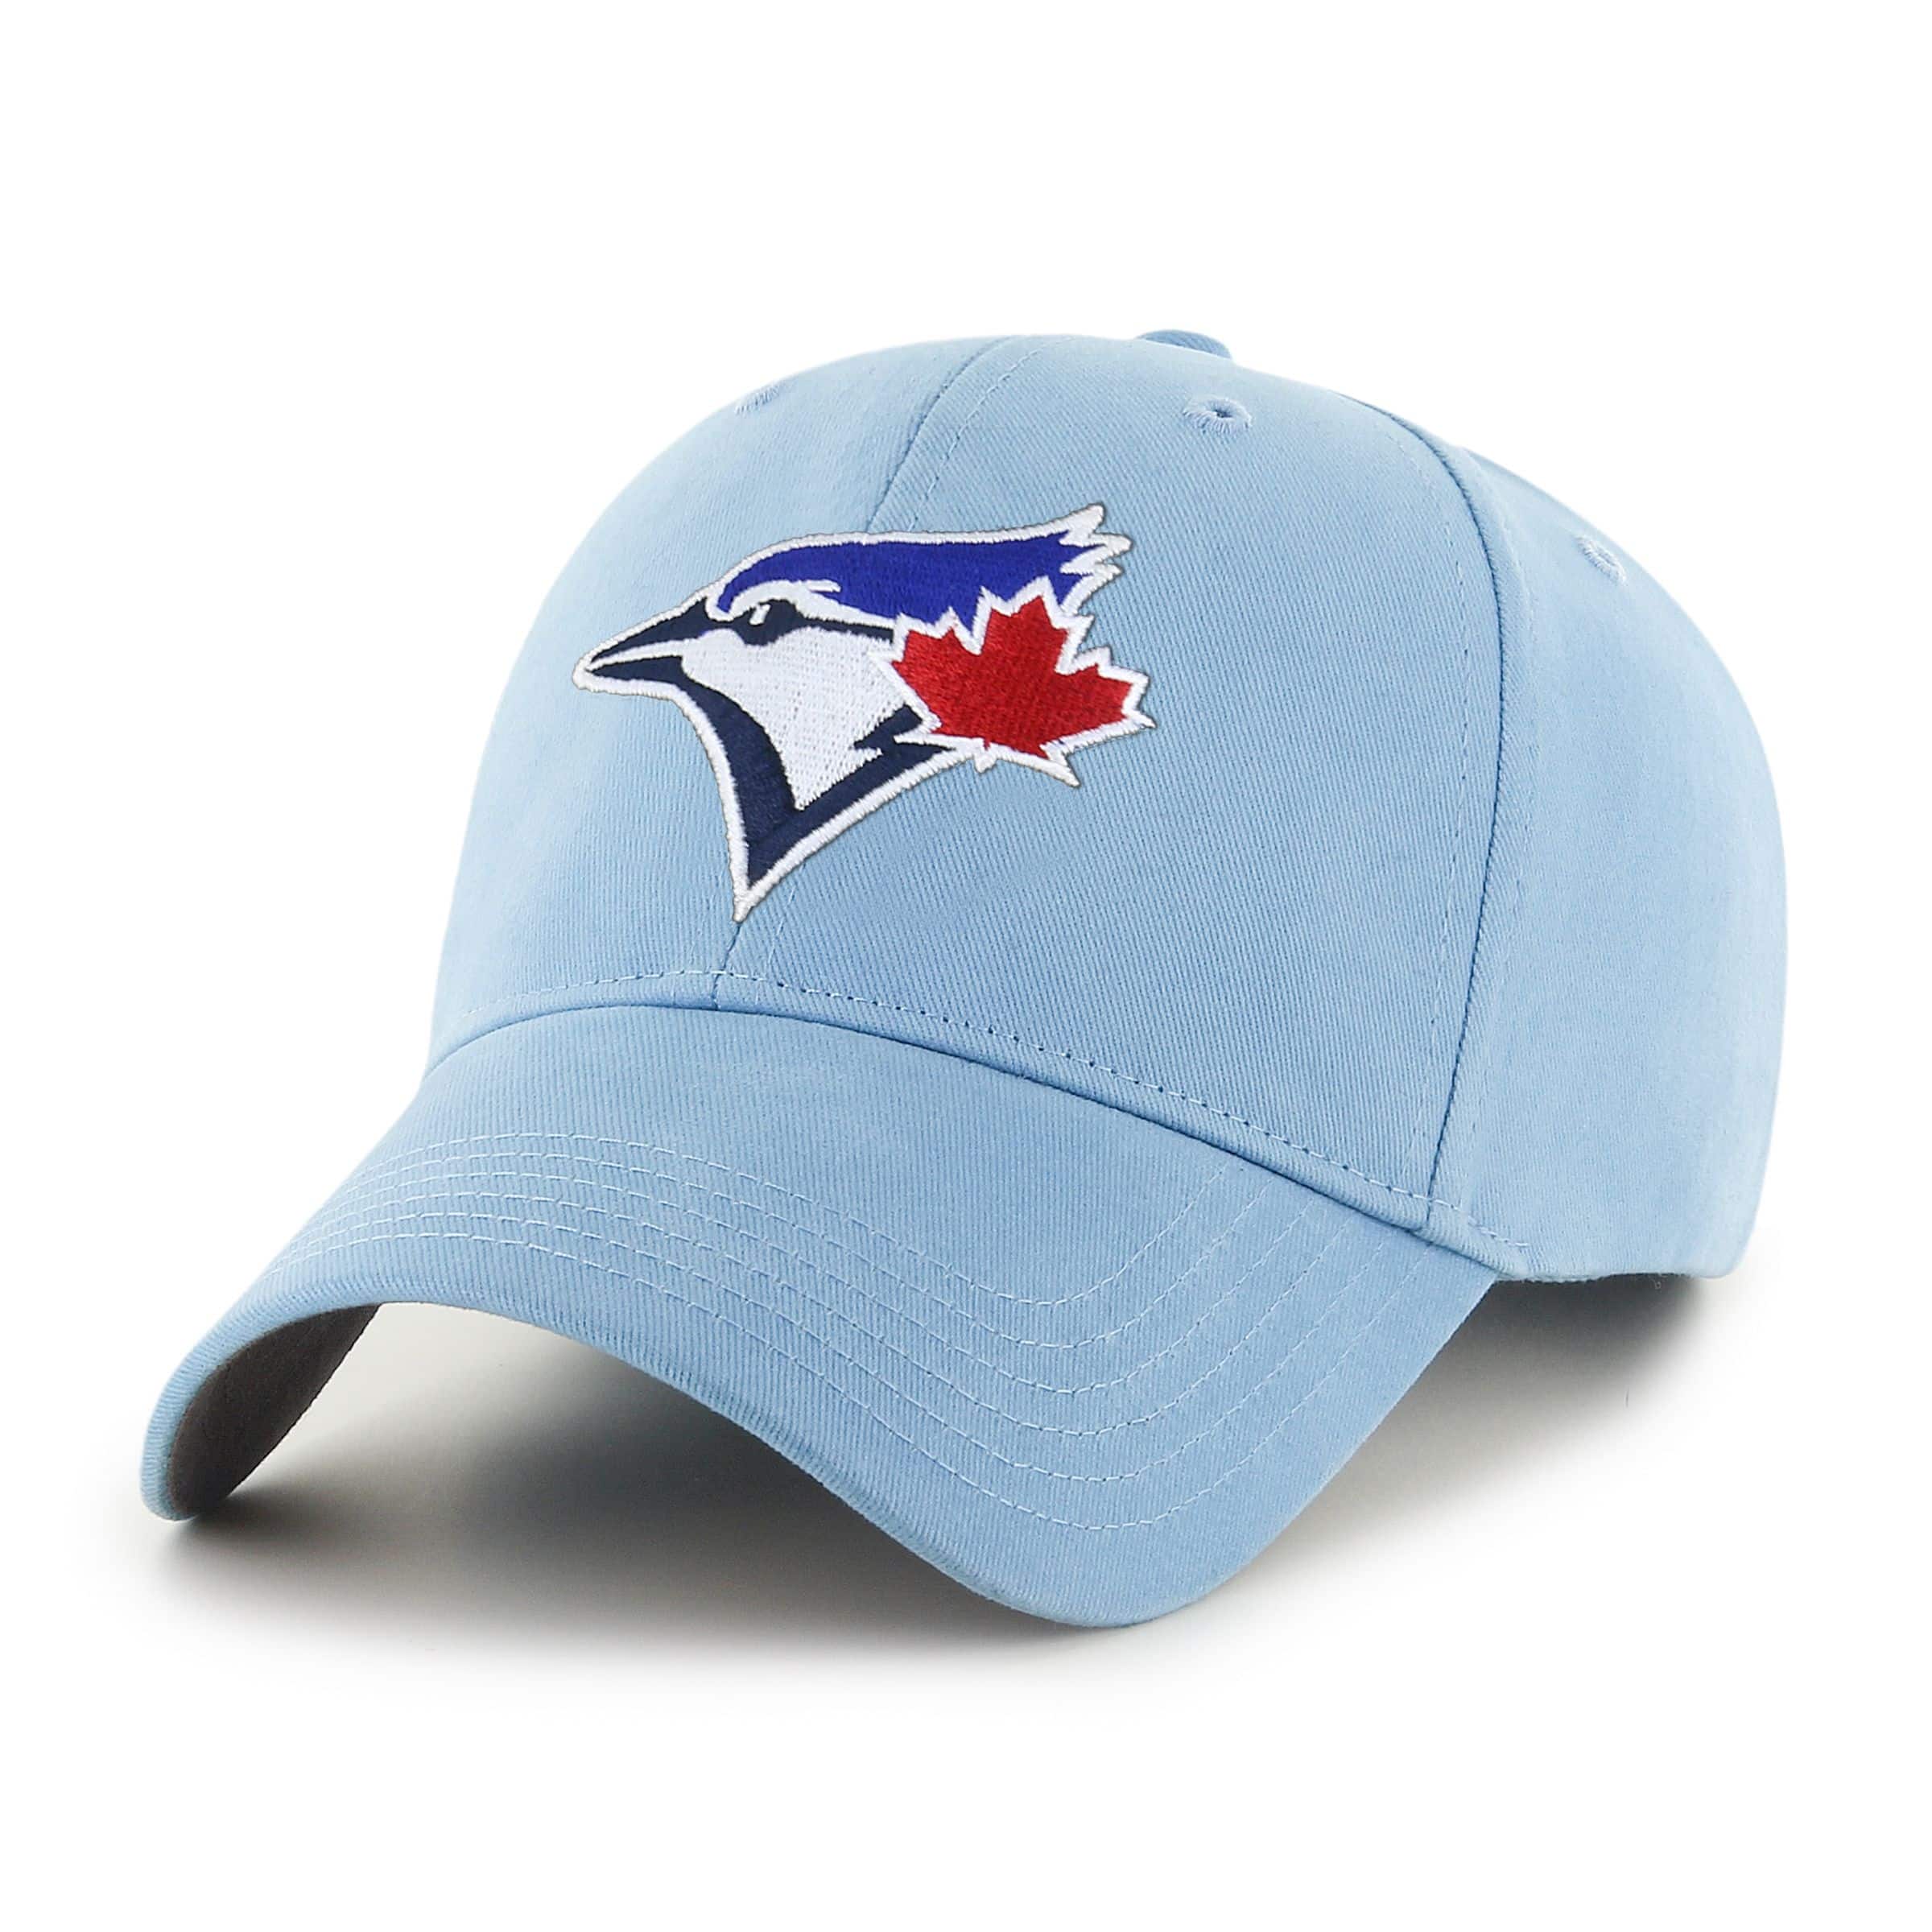 MLB Toronto Blue Jays Men's/Women's Unisex Adjustable Cotton Baseball Cap/ Hat, Powder Blue